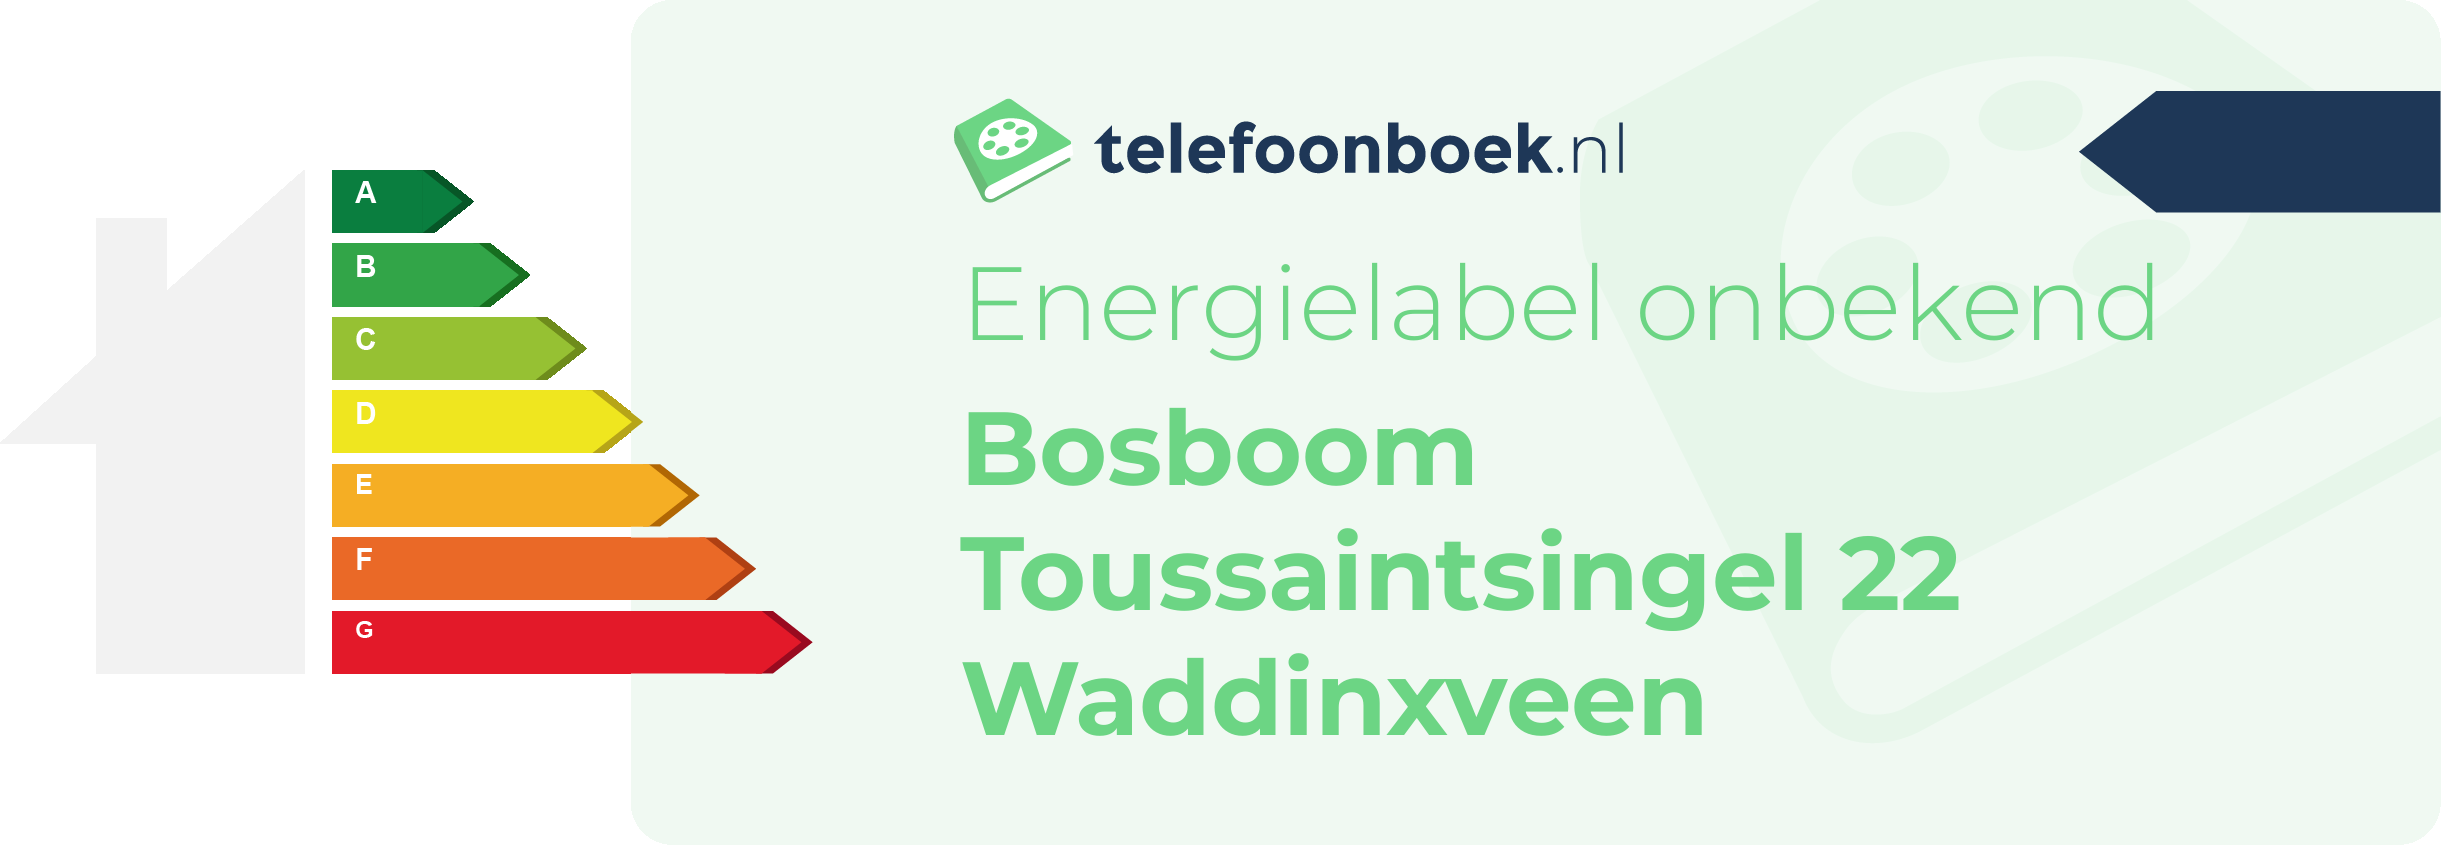 Energielabel Bosboom Toussaintsingel 22 Waddinxveen